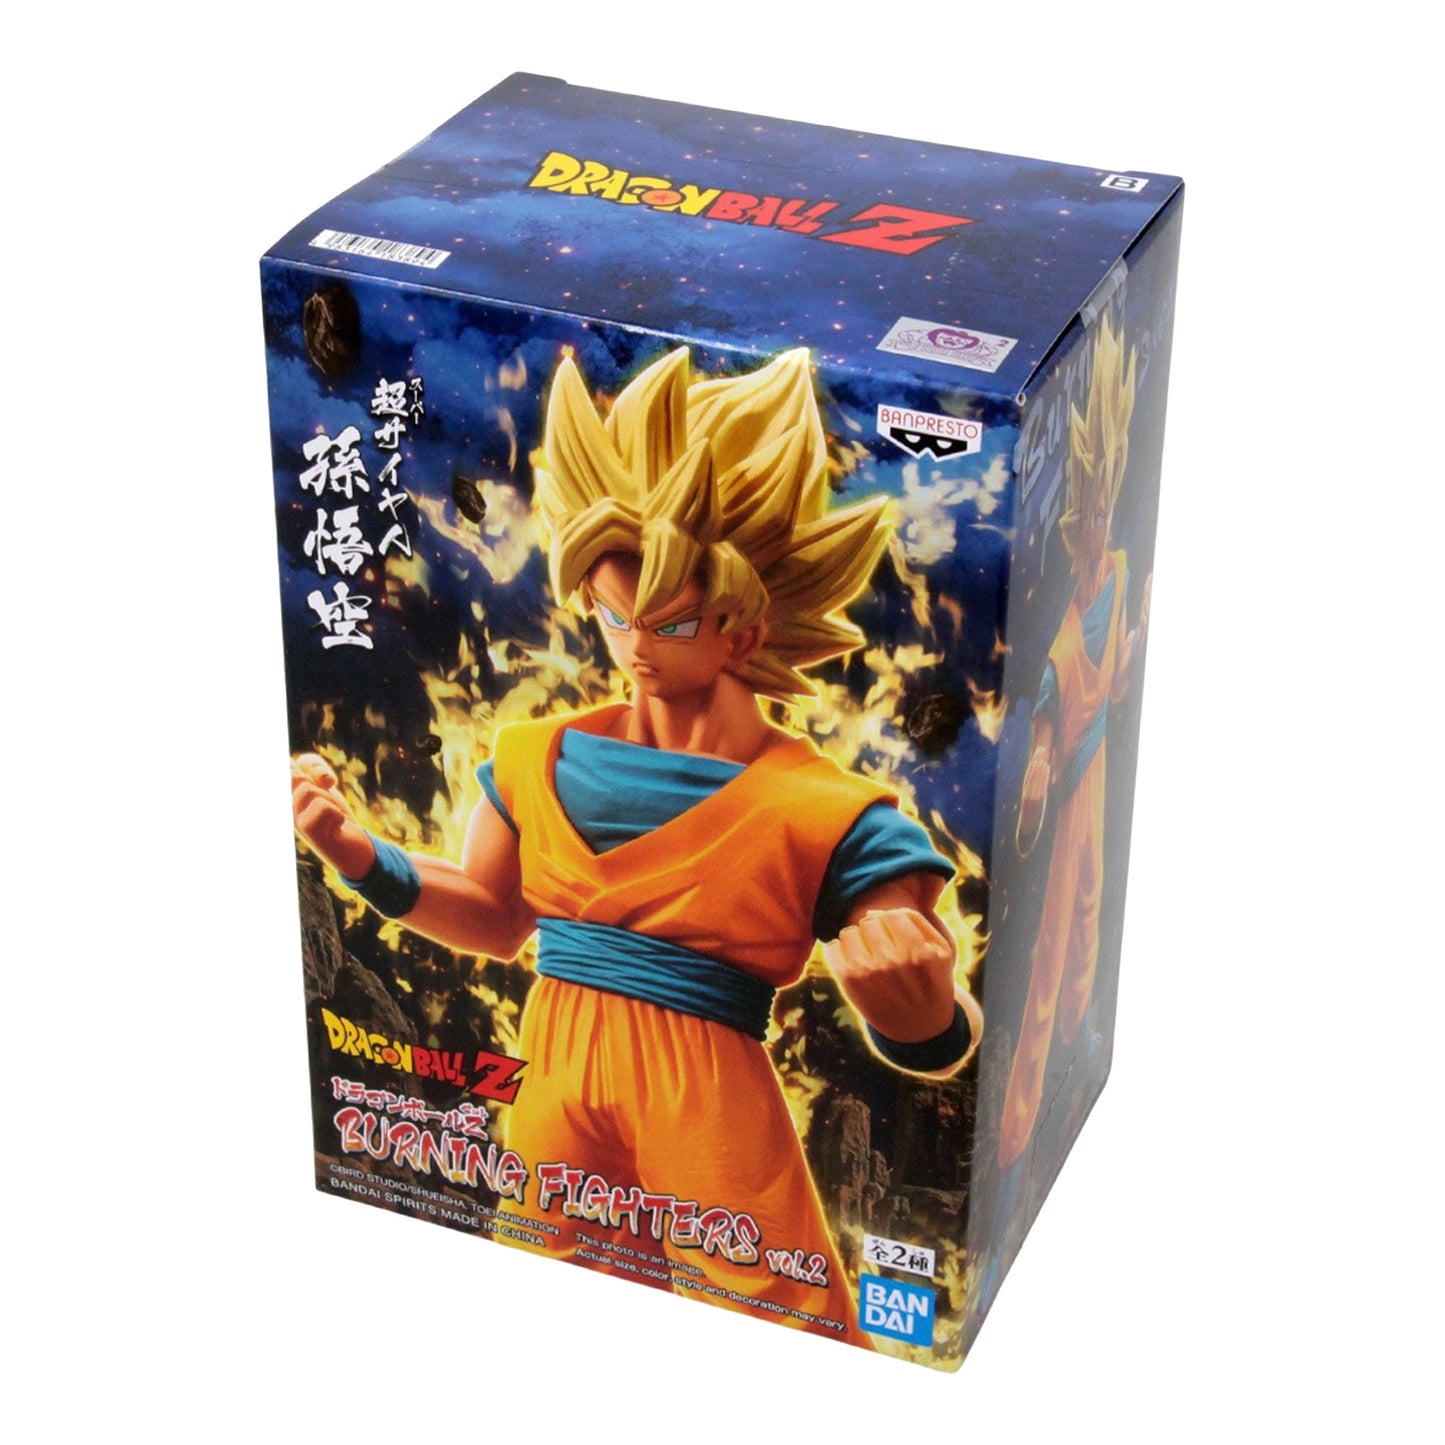 Banpresto x Bandai: Dragon Ball Z - Burning Fighters Vol. 2 Super Saiyan Son Goku Figure